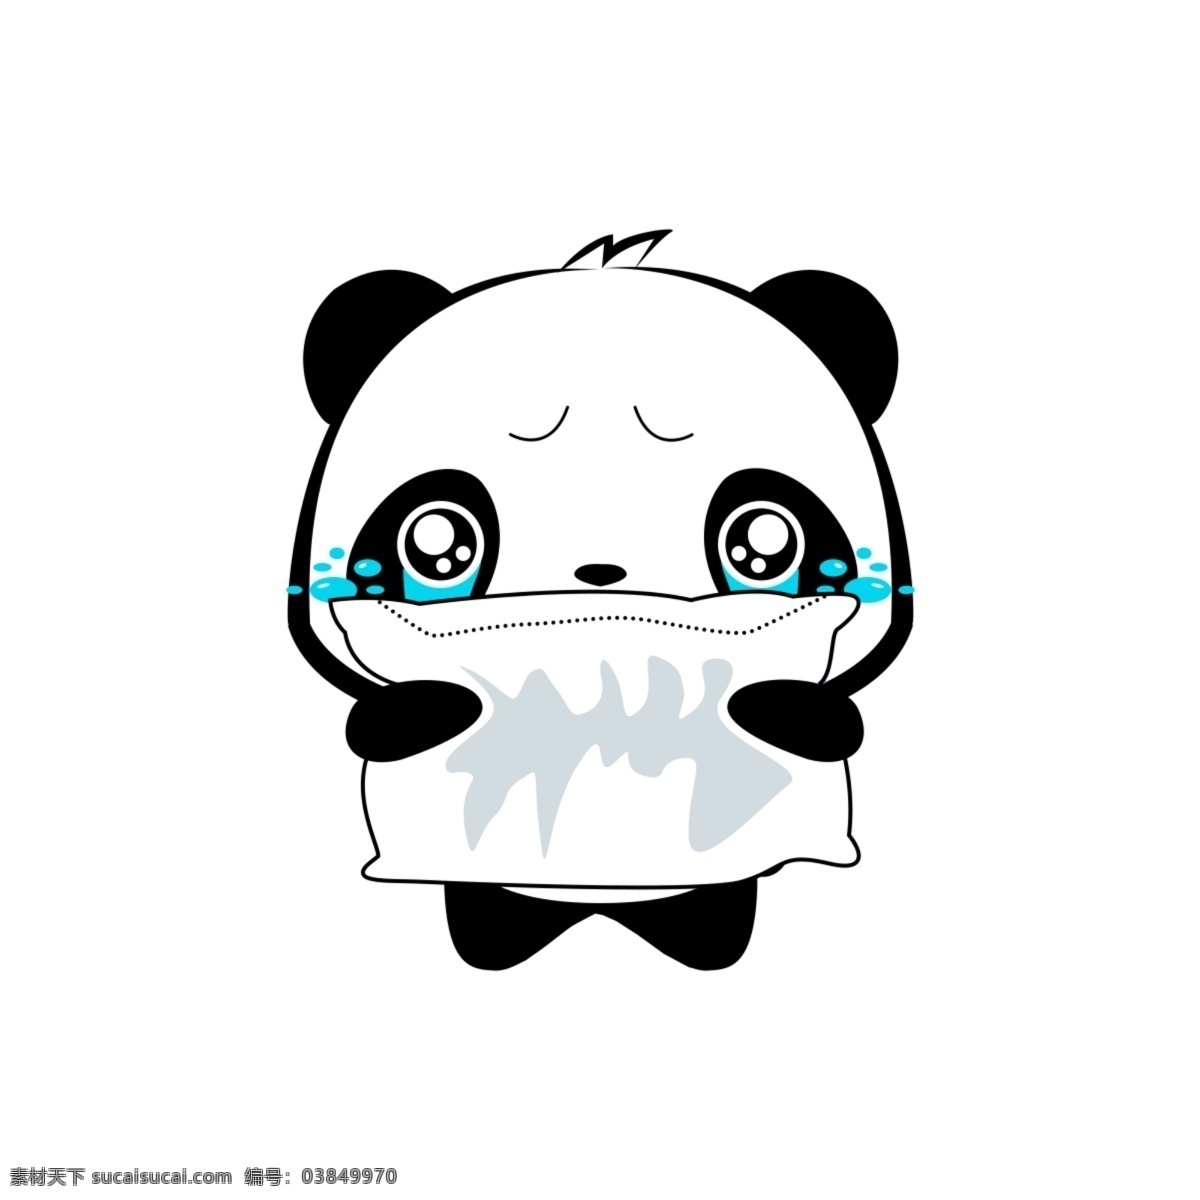 熊猫 哭泣 抱枕 表情 包 可爱 卖萌 表情包 表情设计